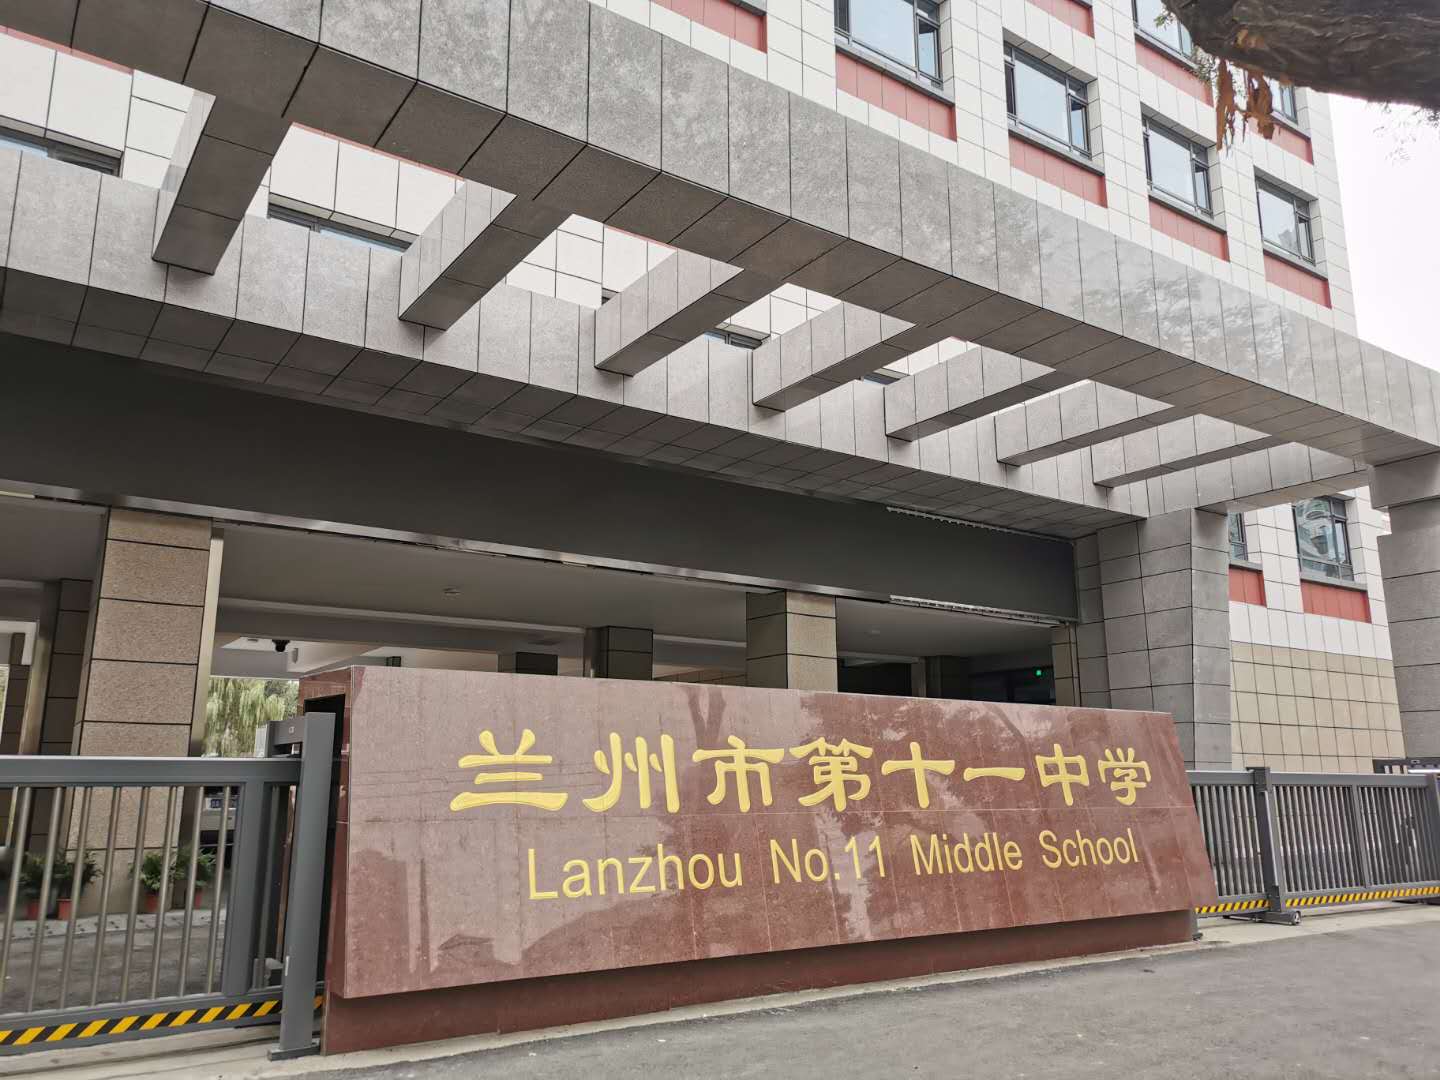 Case sharing【Sistema de PA de red IP DSPPA 】Escuela secundaria Lanzhou No.11